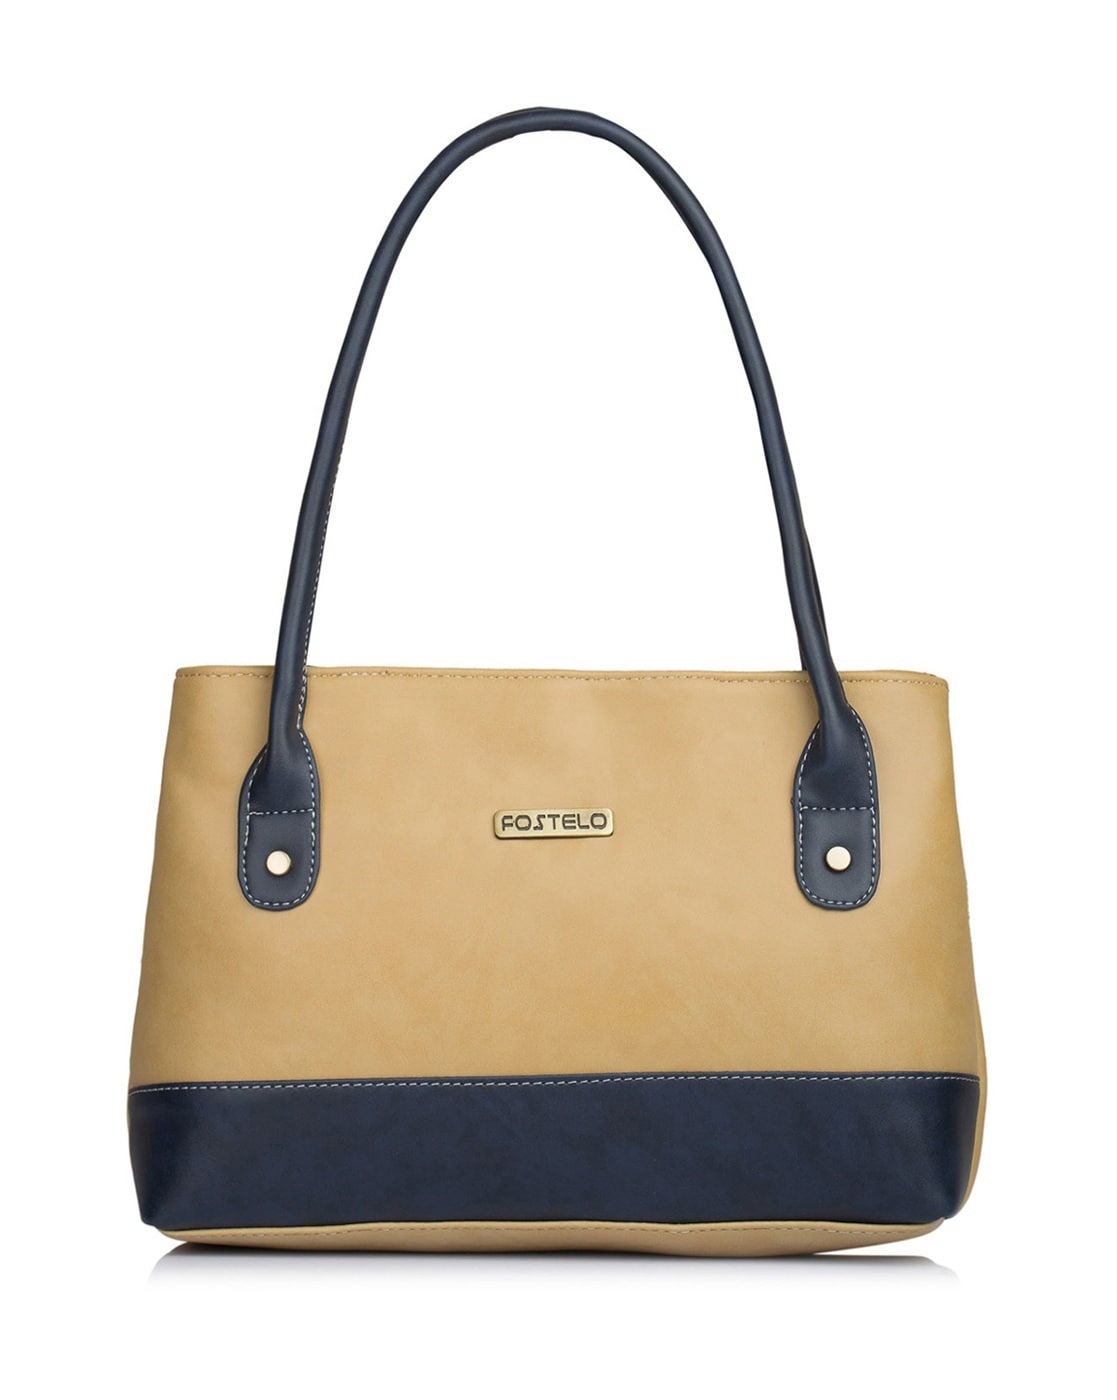 Buy Zara Reite White & Red Tote Handbag (Set of 4) at Amazon.in